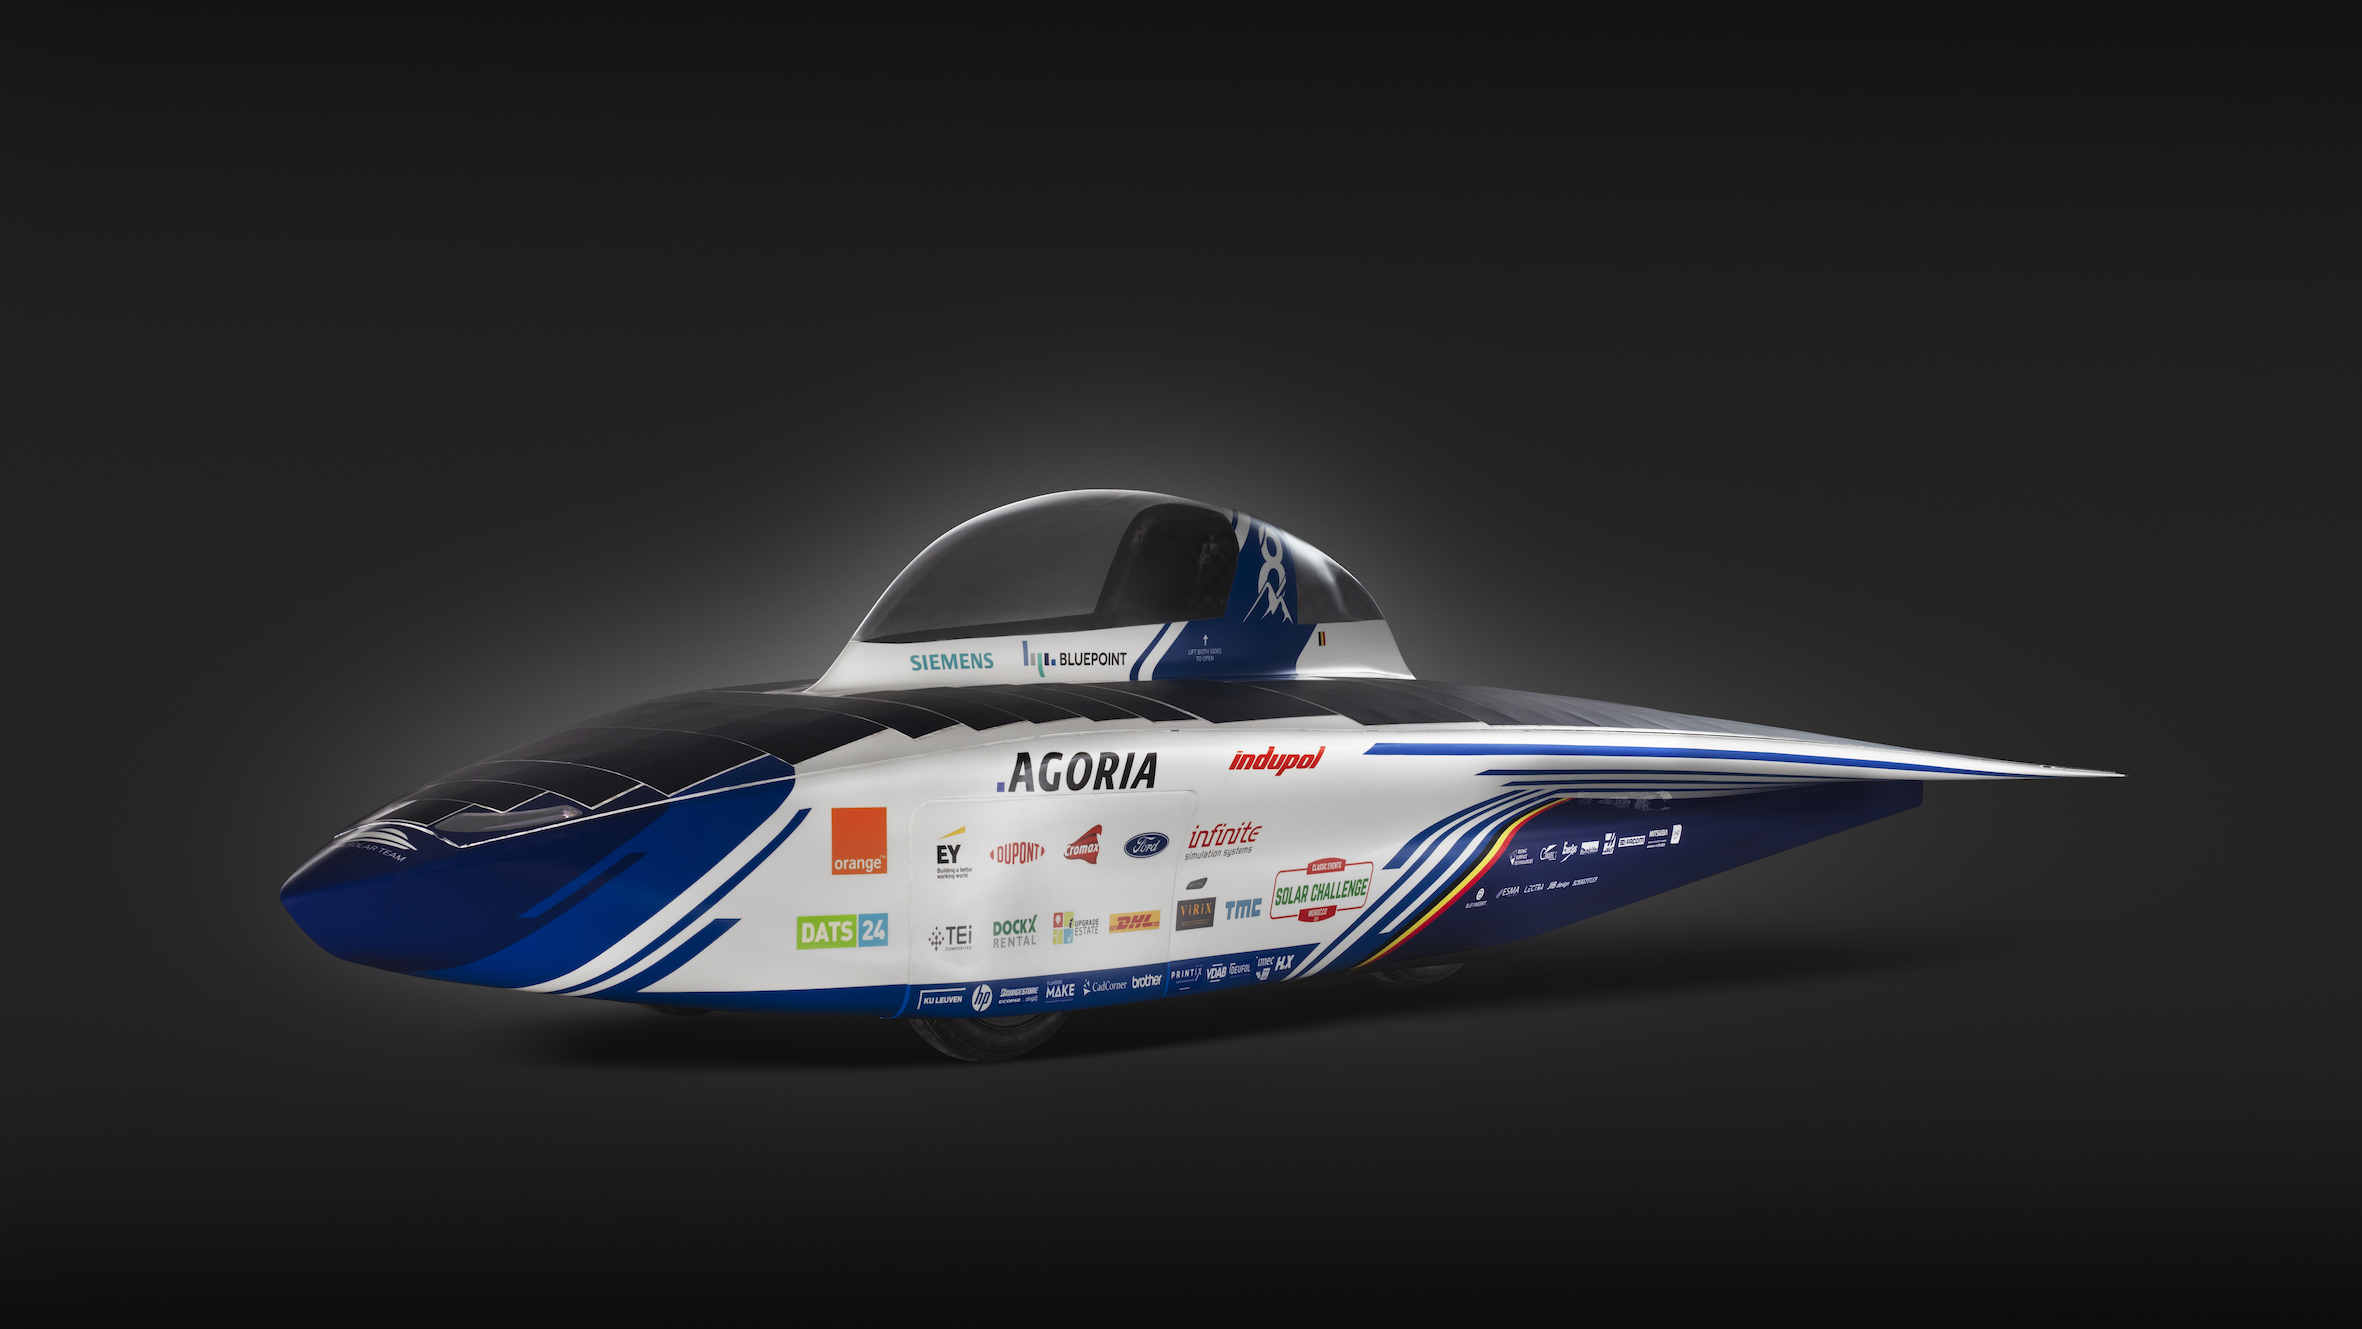 cx-agoria-solar-team-unveil-the-ninth-belgian-solar-car-bluepoint-atlas